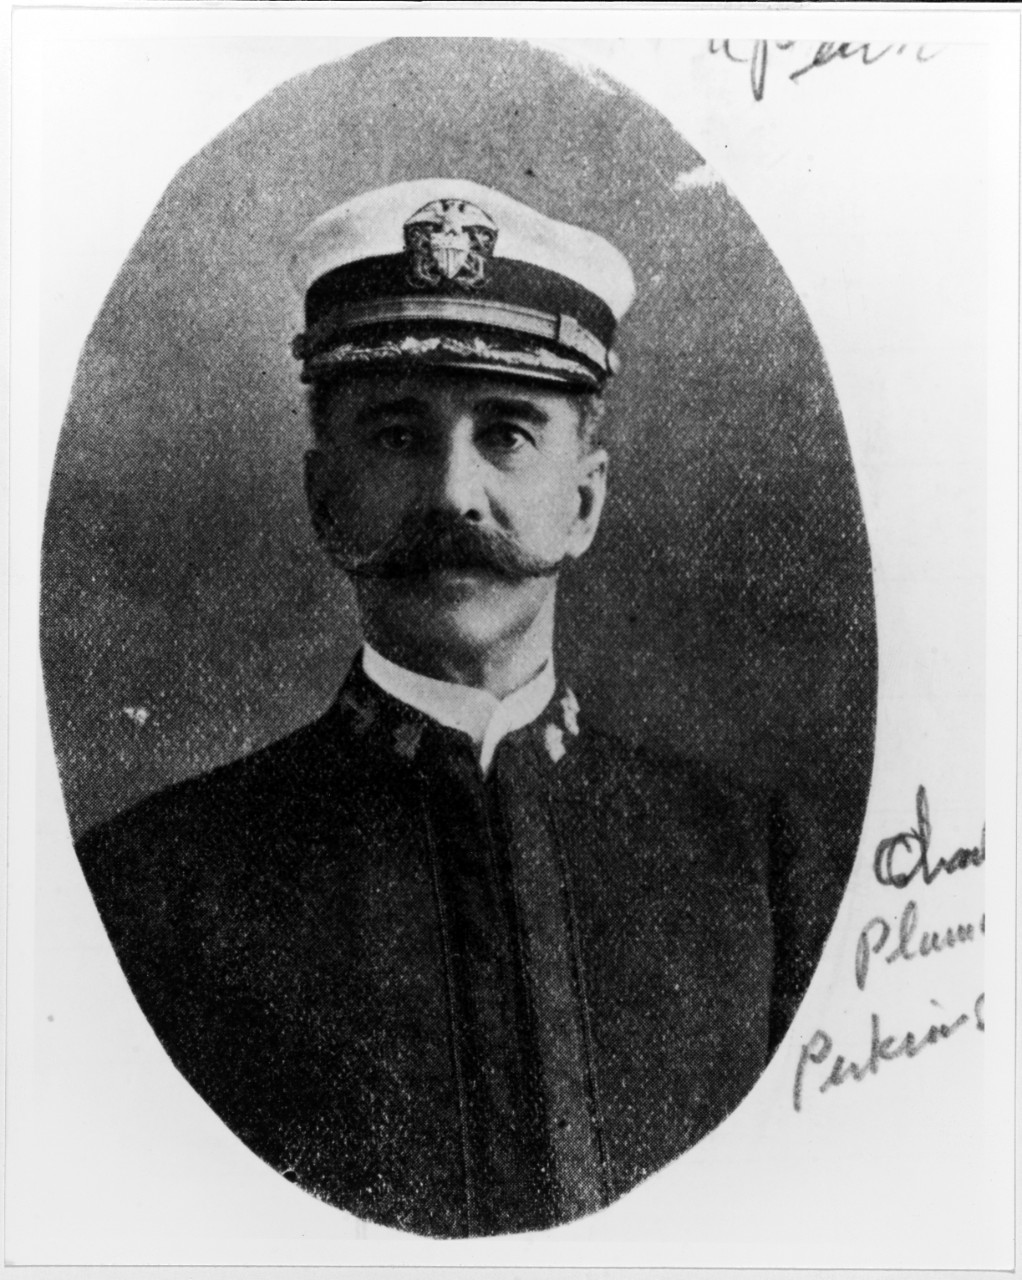 Lieutenant Commander Charles Plummer Perkins, USN